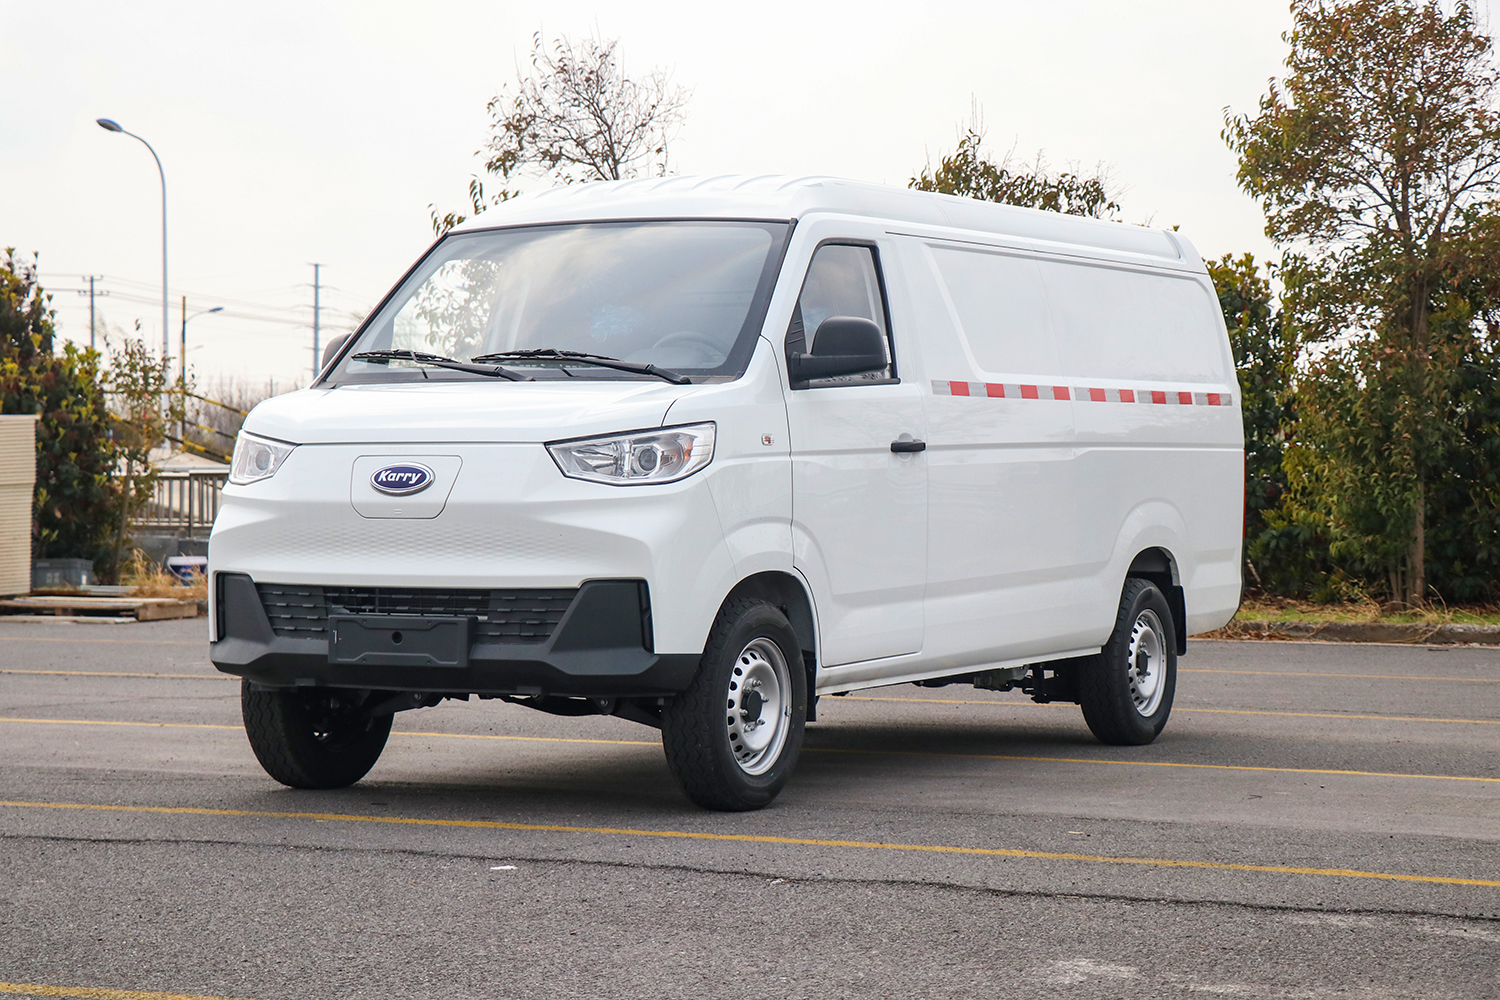  Karry Youyou EV 2.1T 4.43m pure electric van logistics vehicle